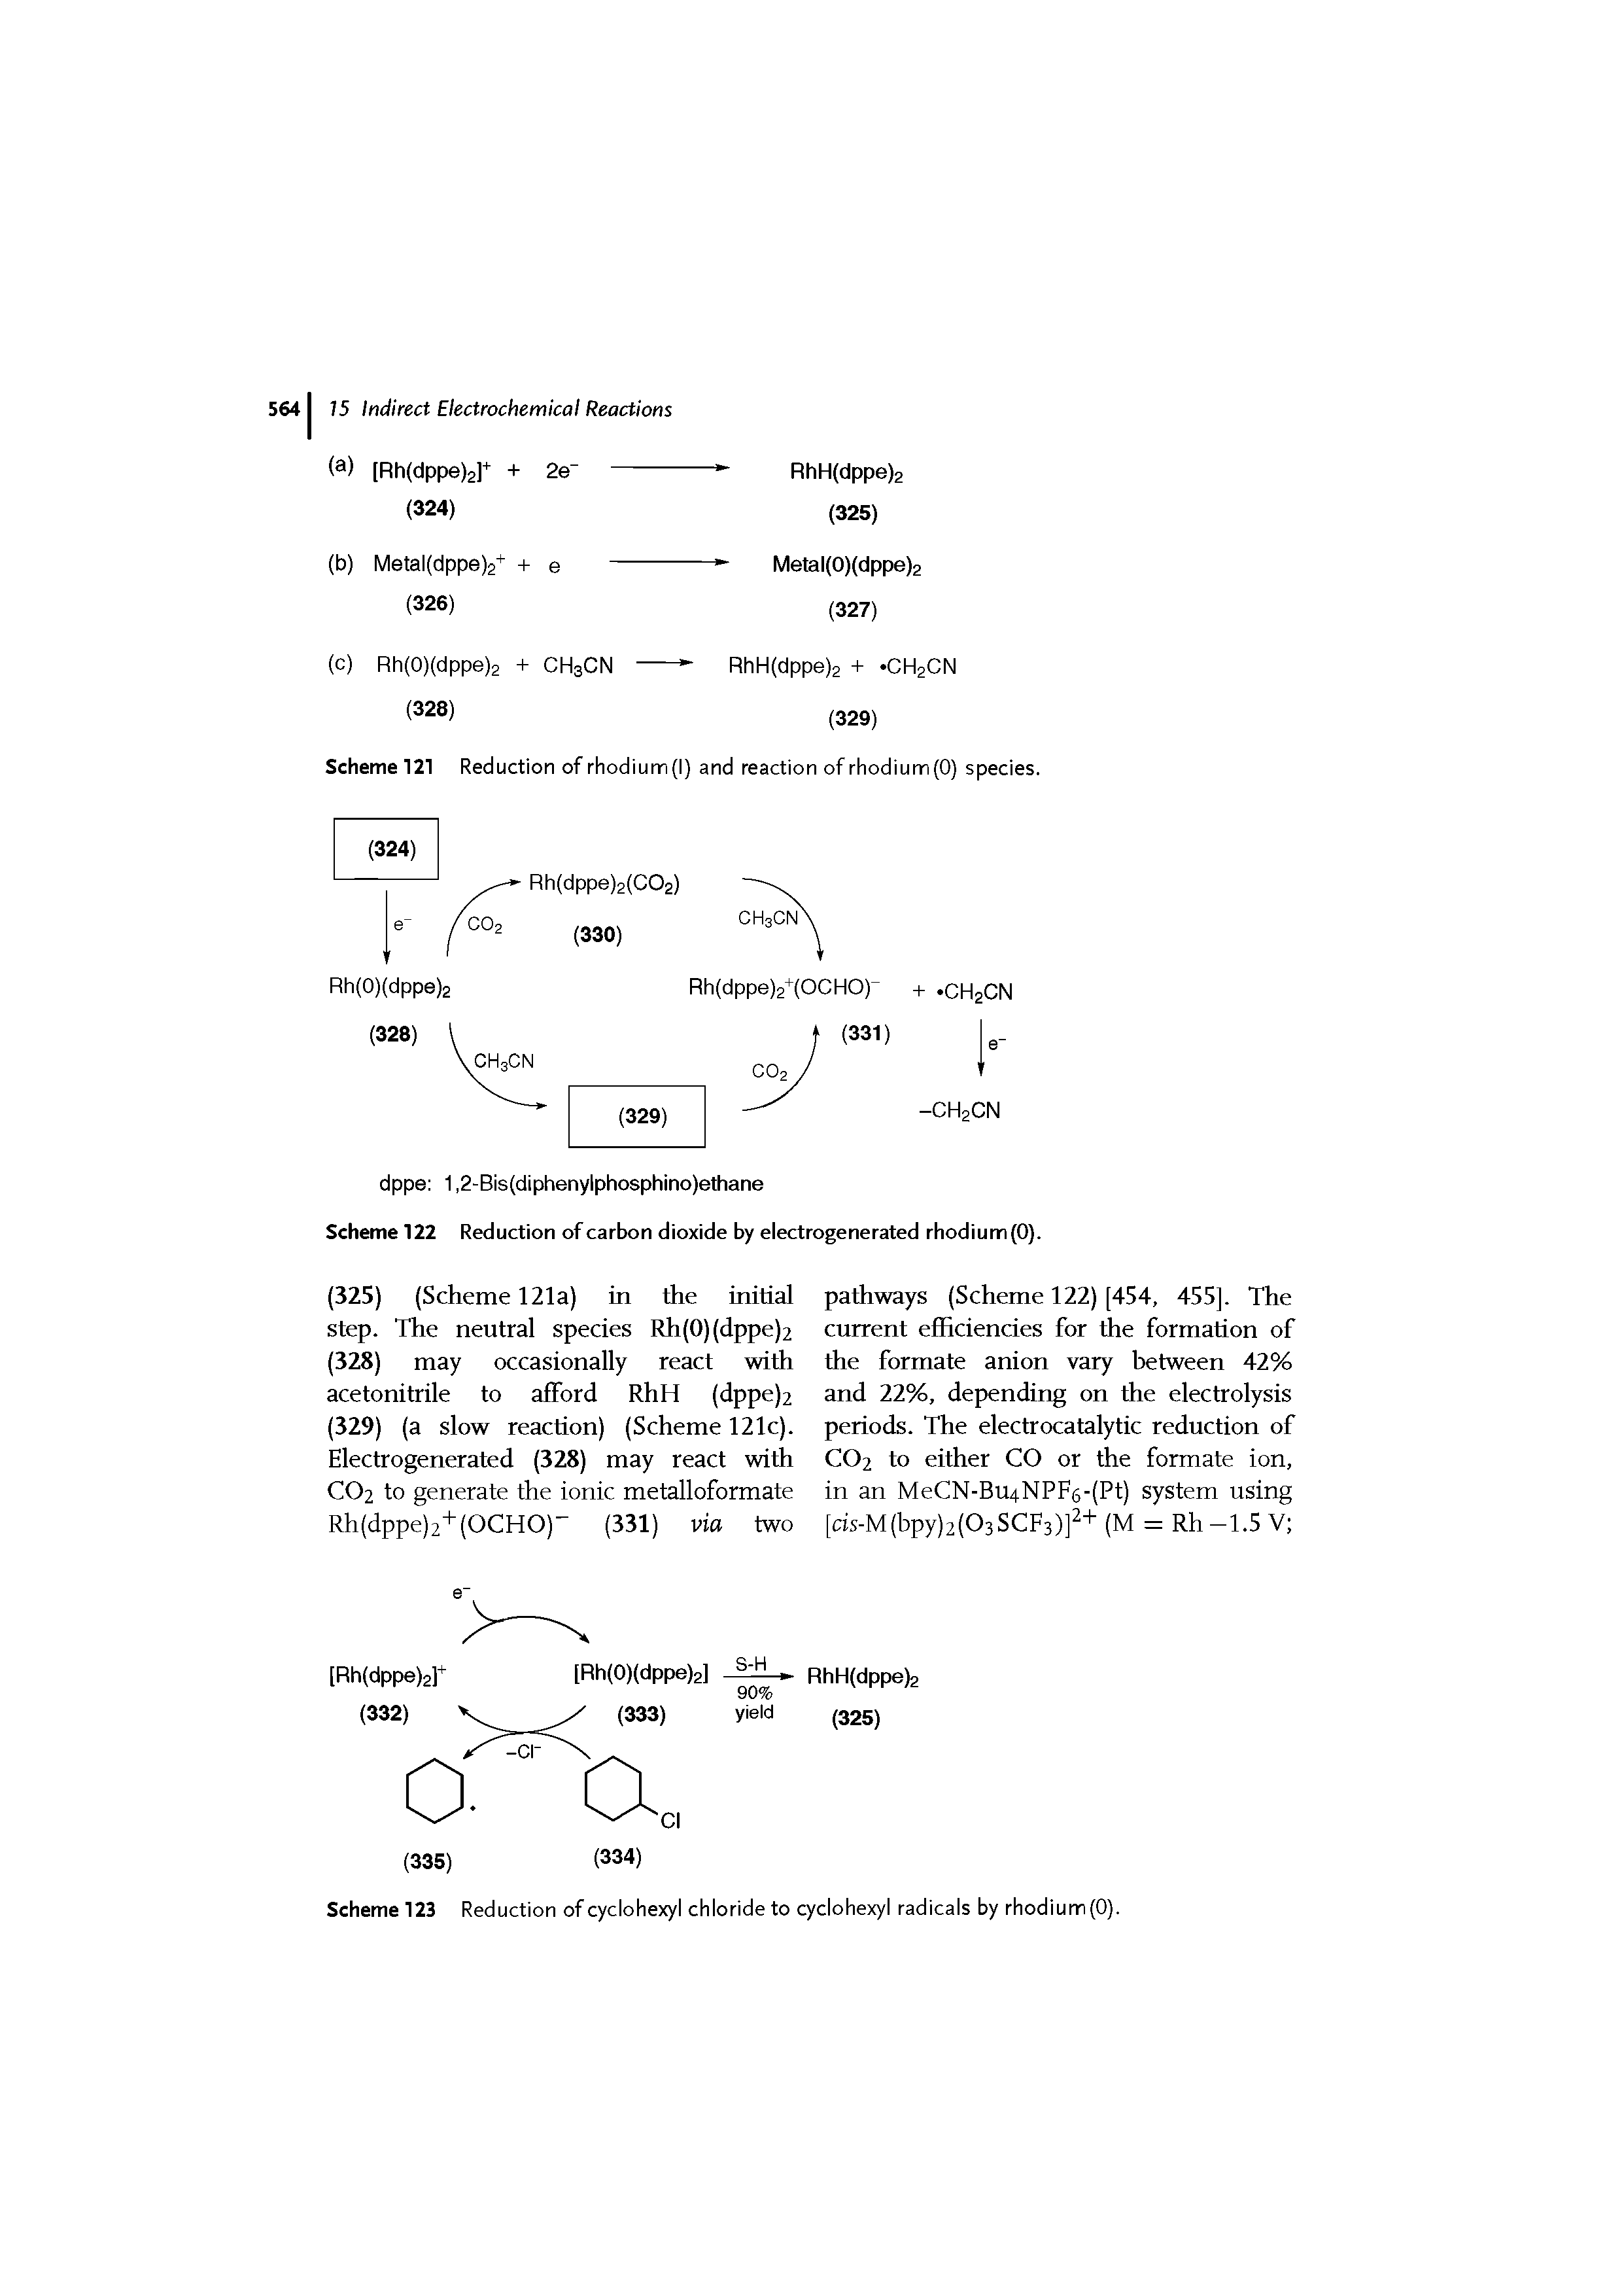 Scheme 123 Reduction of cyclohexyl chloride to cyclohexyl radicals by rhodium (0).